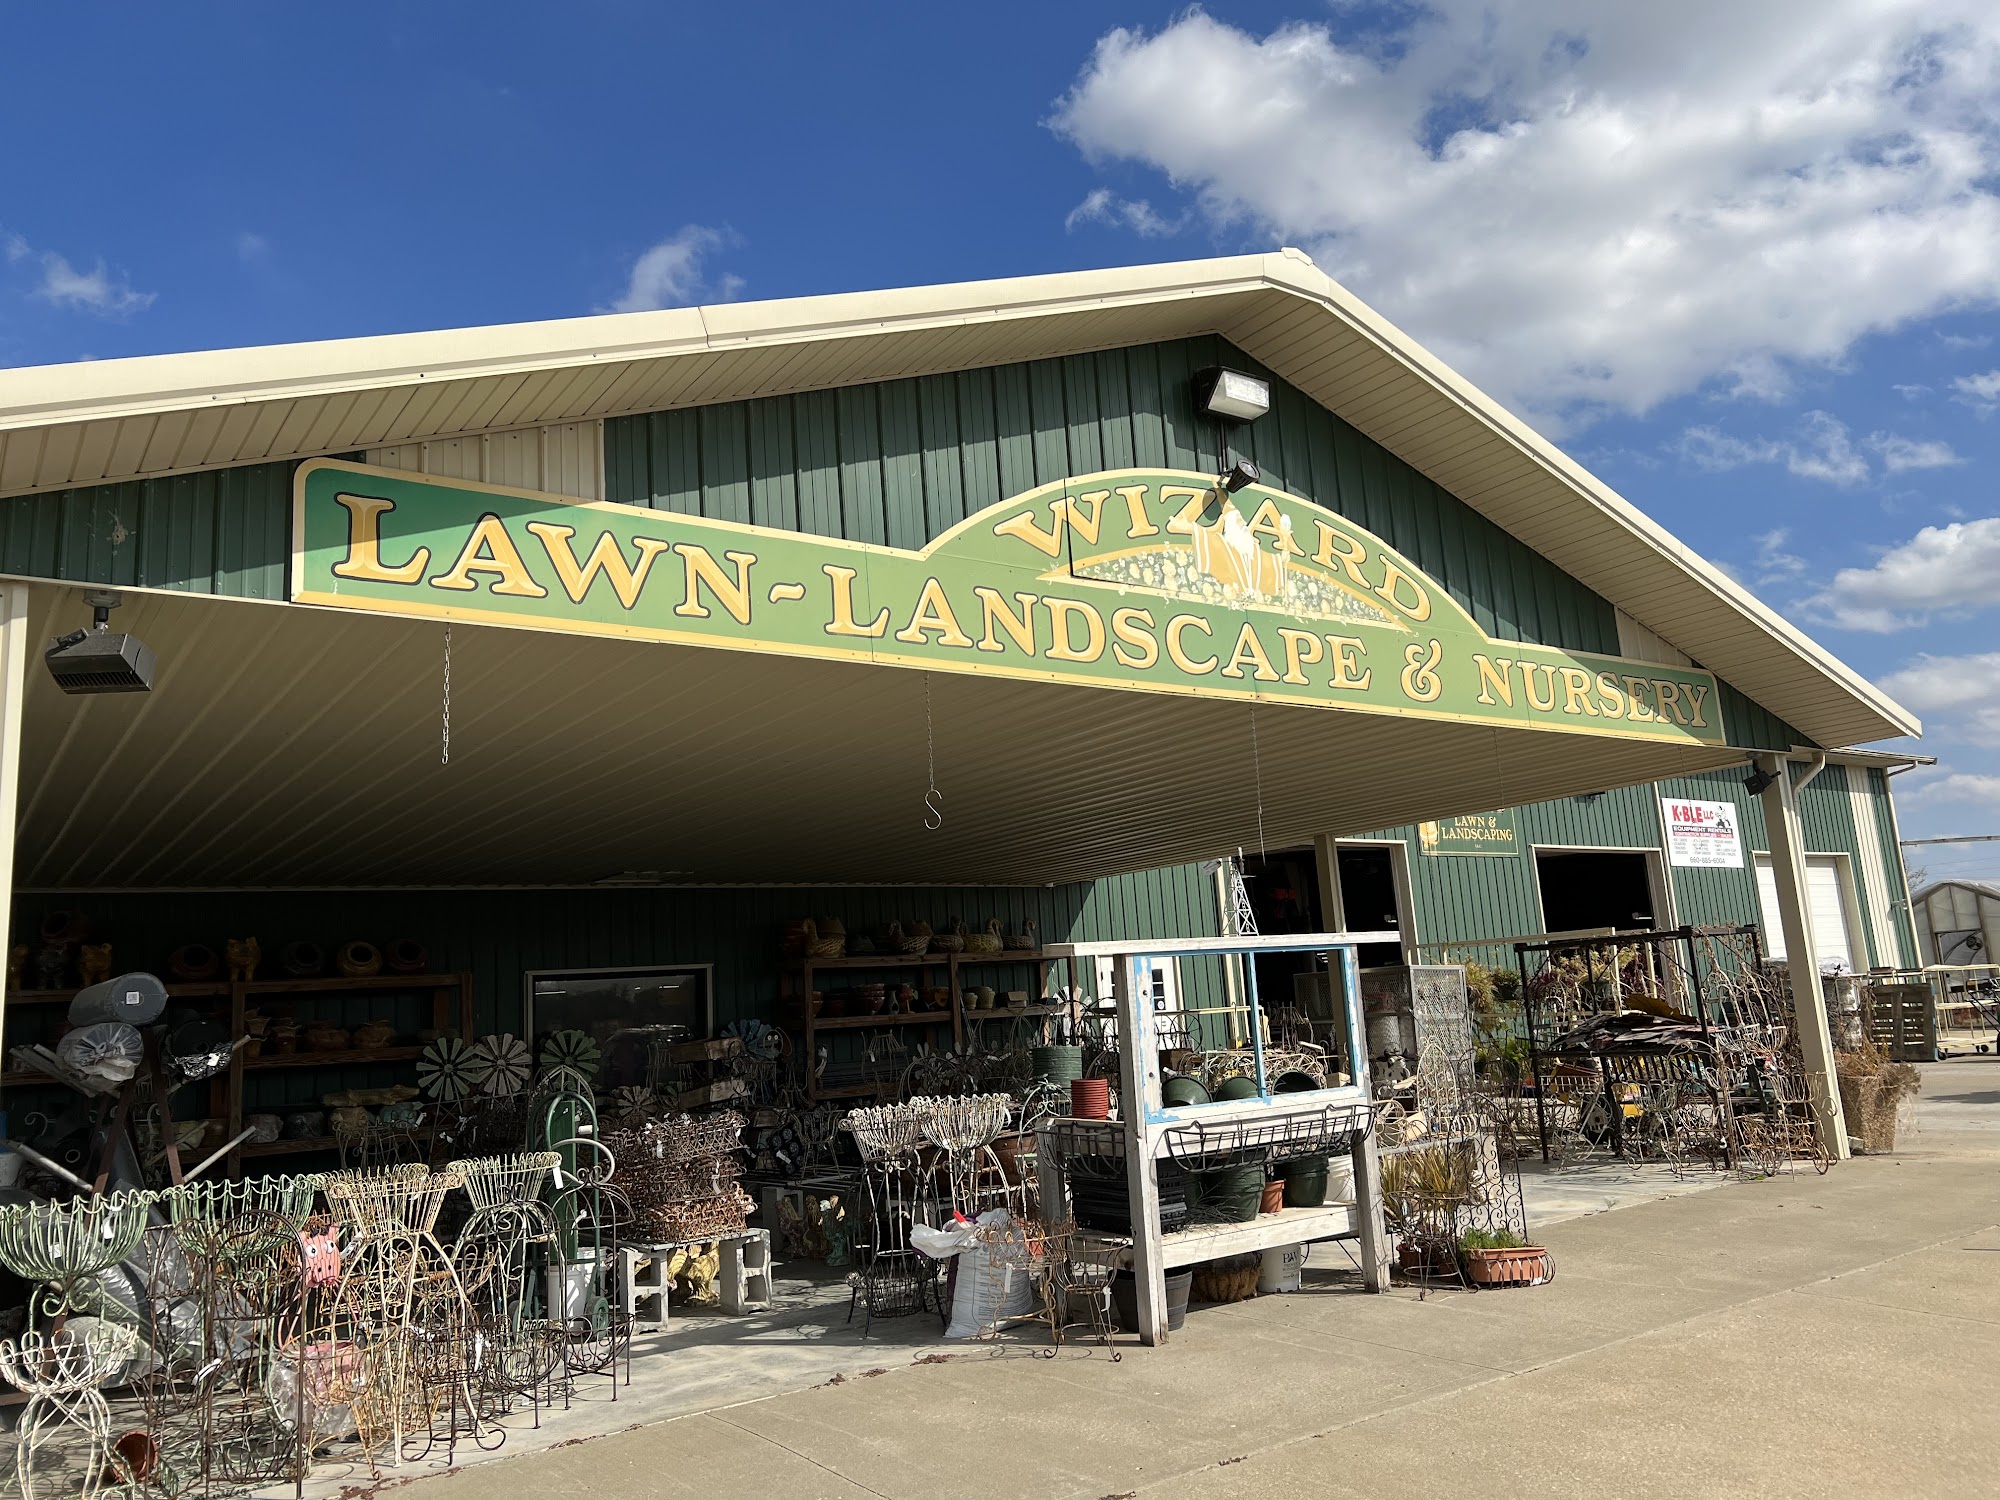 Wizard Lawn & Landscaping 1606 N Water St, Clinton Missouri 64735